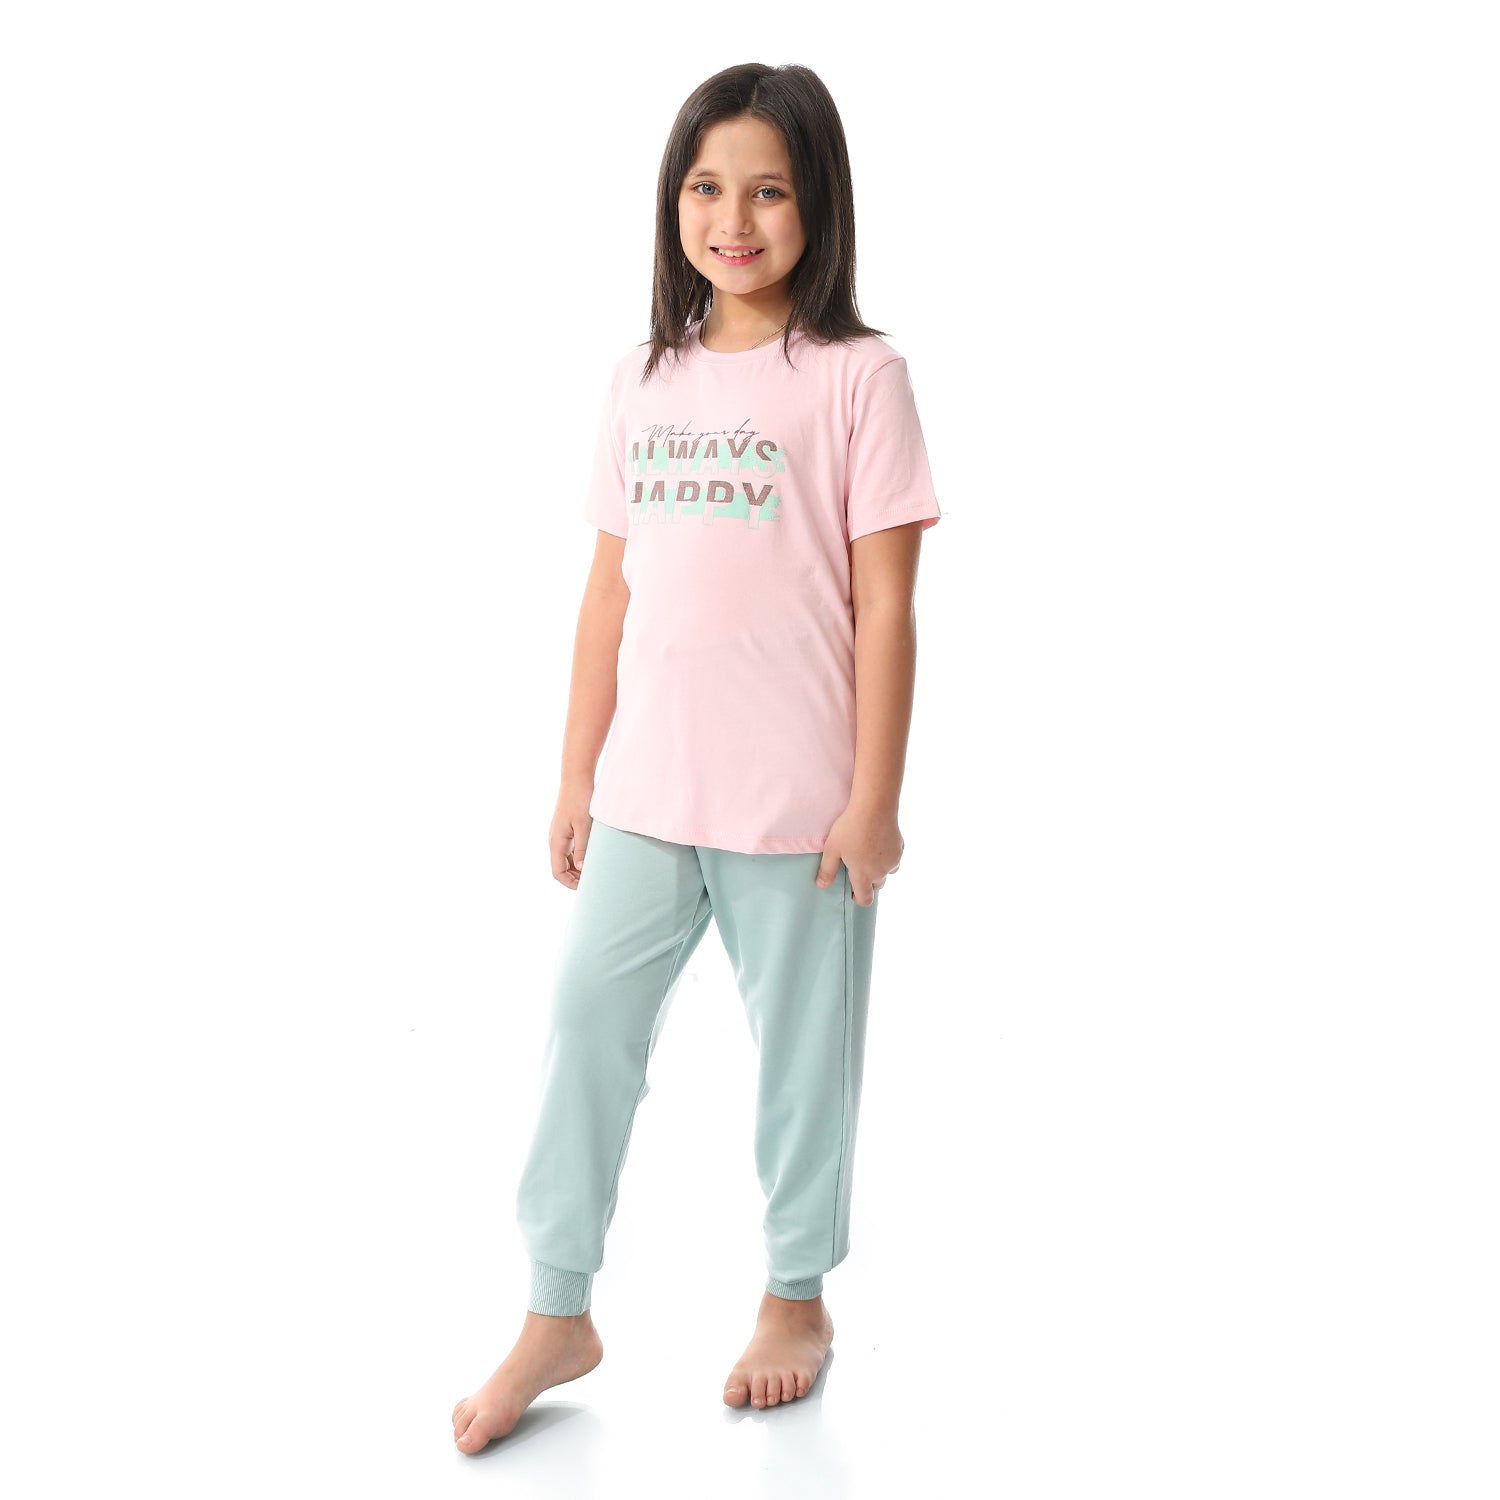 Girls Printed Short Sleeves Tee & Pants Pajama Set - Mint & Pastel Mint